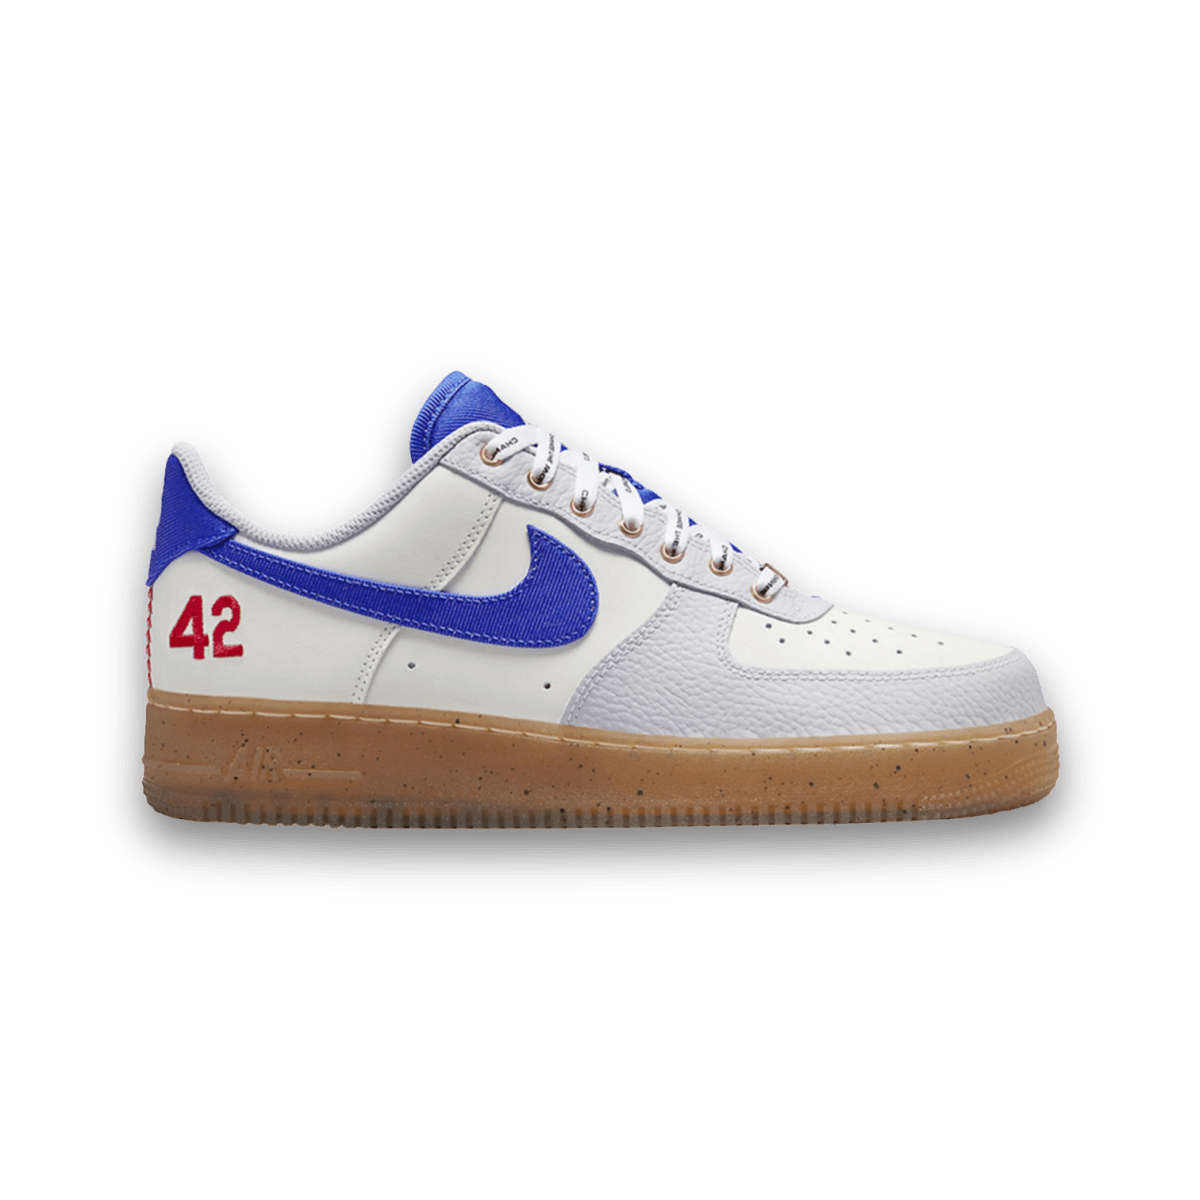 Air Force 1 Low 'Jackie Robinson' - sneaker - Low Sneaker - Nike - Jawns on Fire